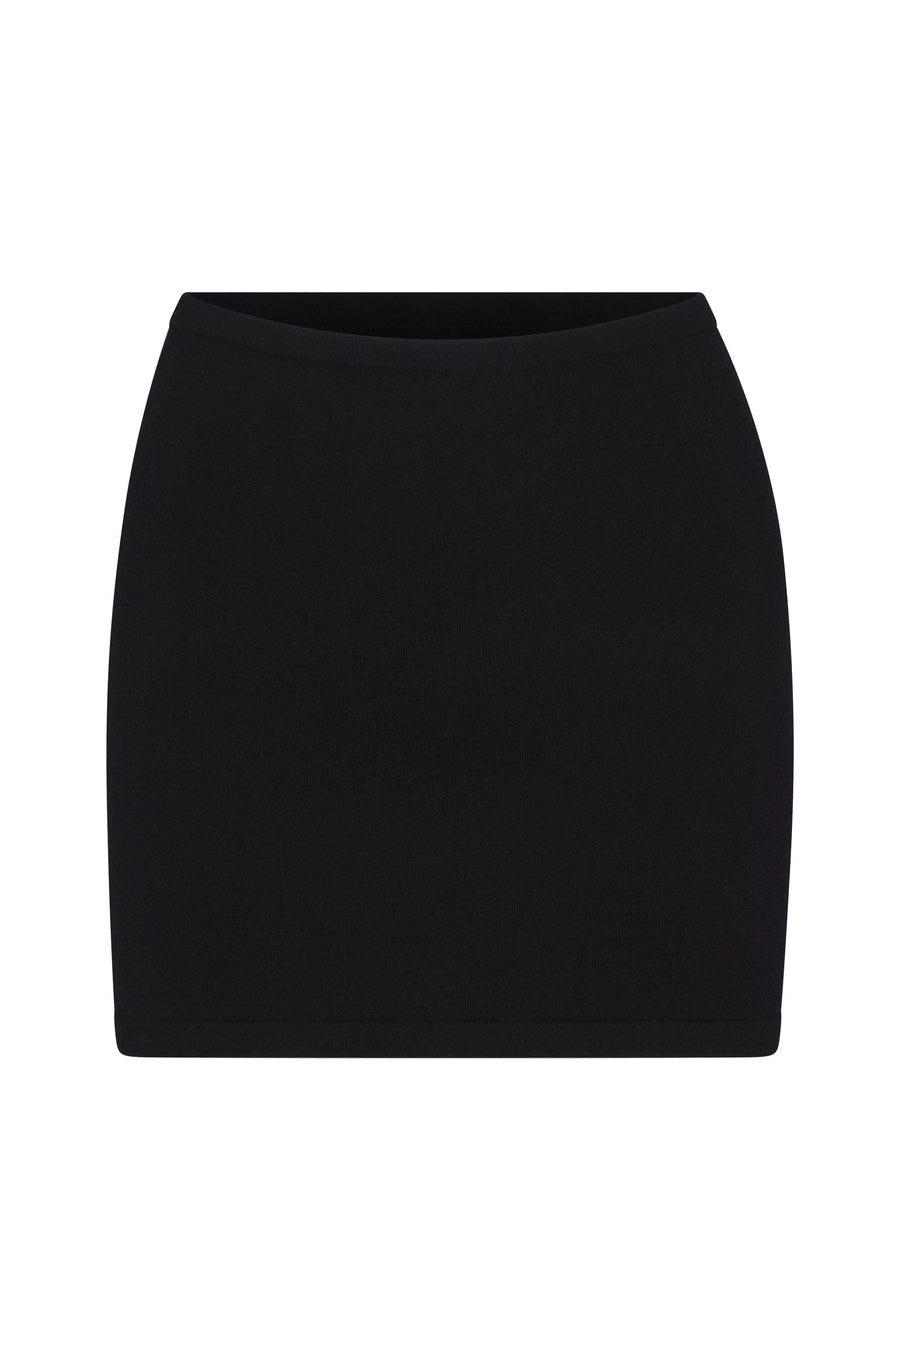 Luna Cashmere Skirt Black SKIRT ÉTERNE 